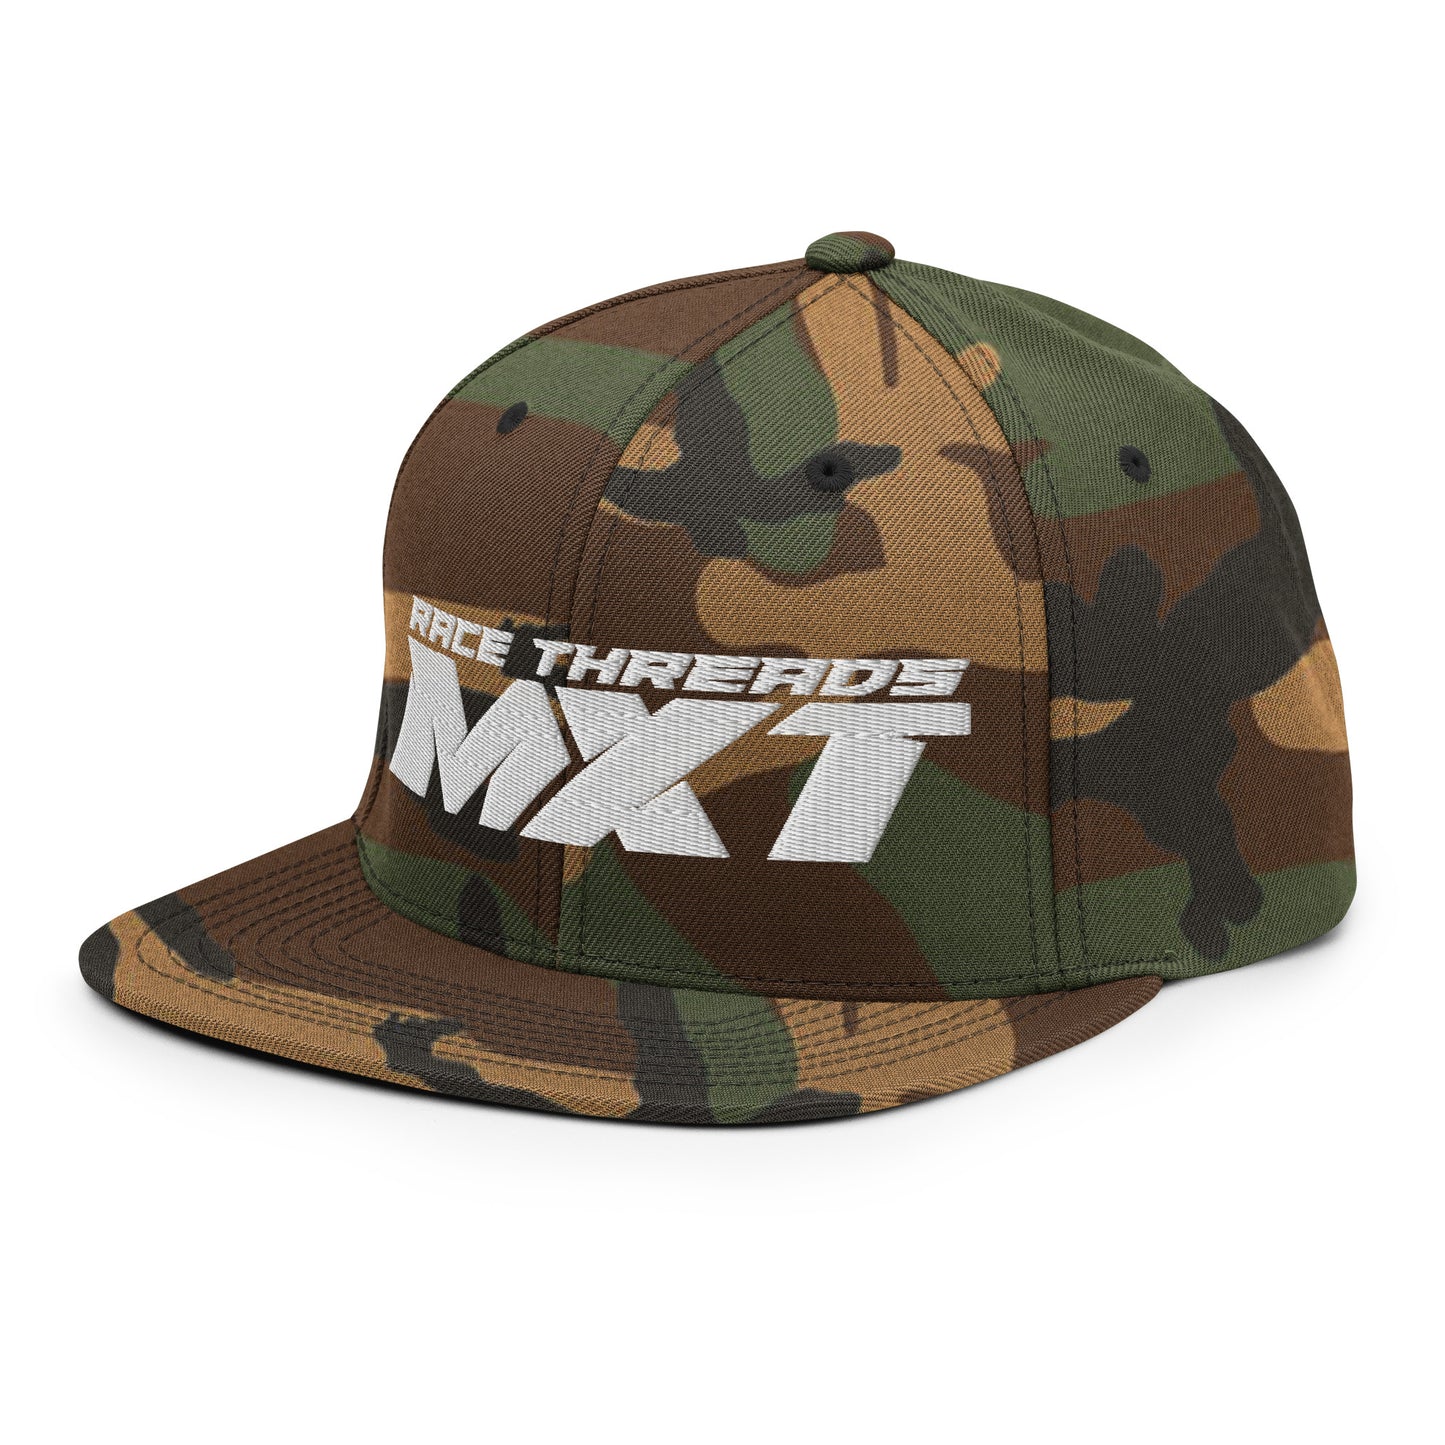 Race Threads MXT Snapback Hat